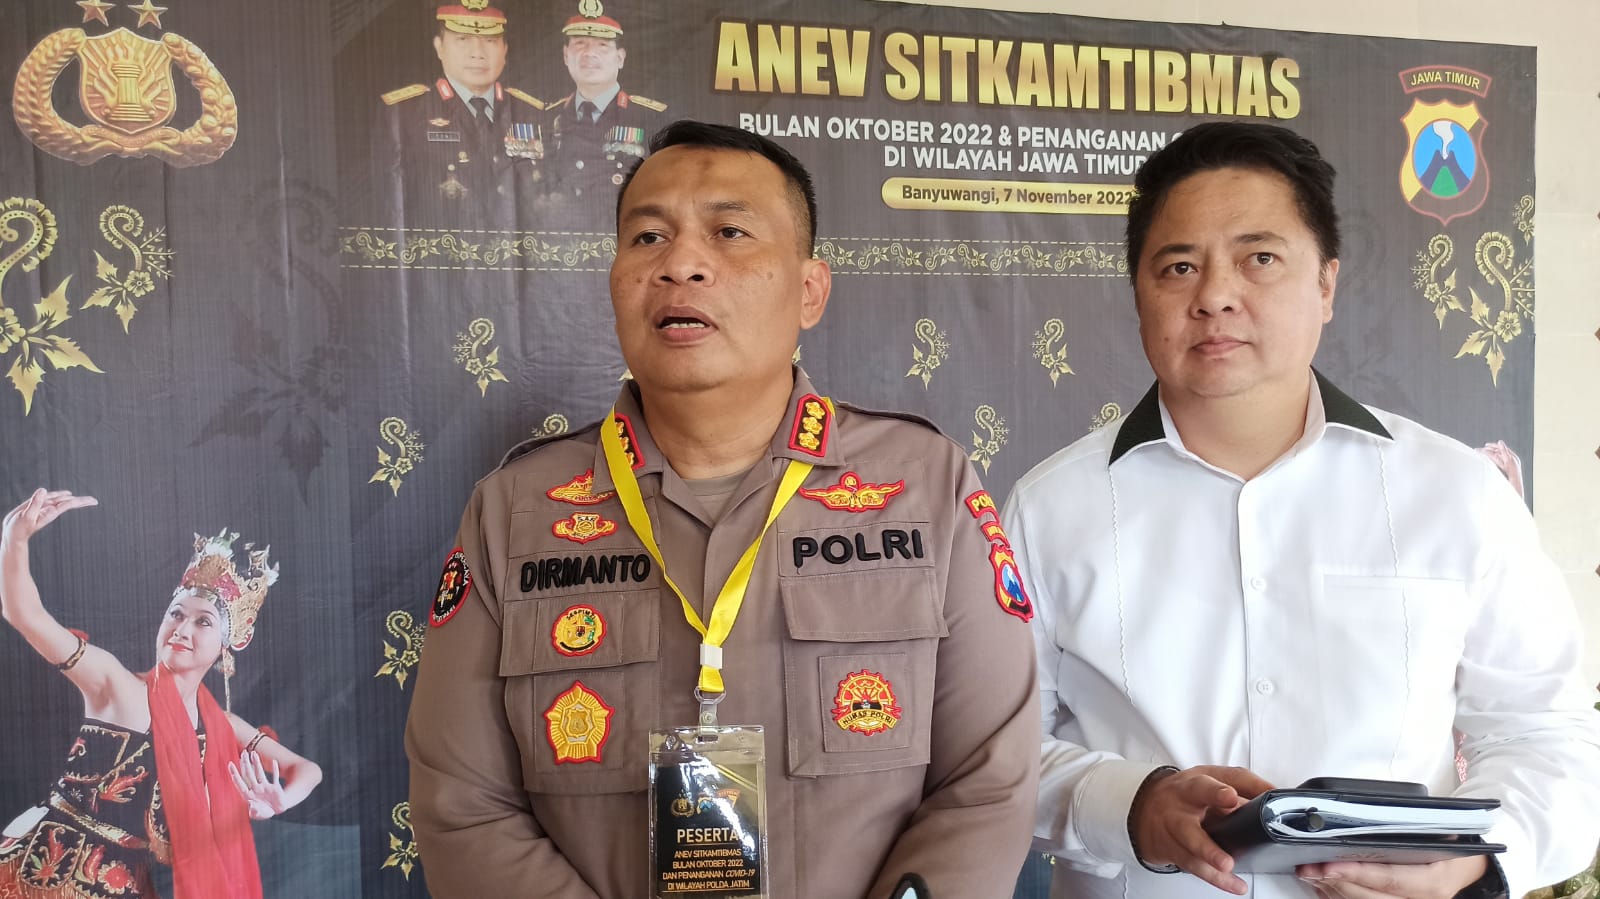 Pelaku pembuat video mesum kebaya merah ditangkap di Medokan Surabaya